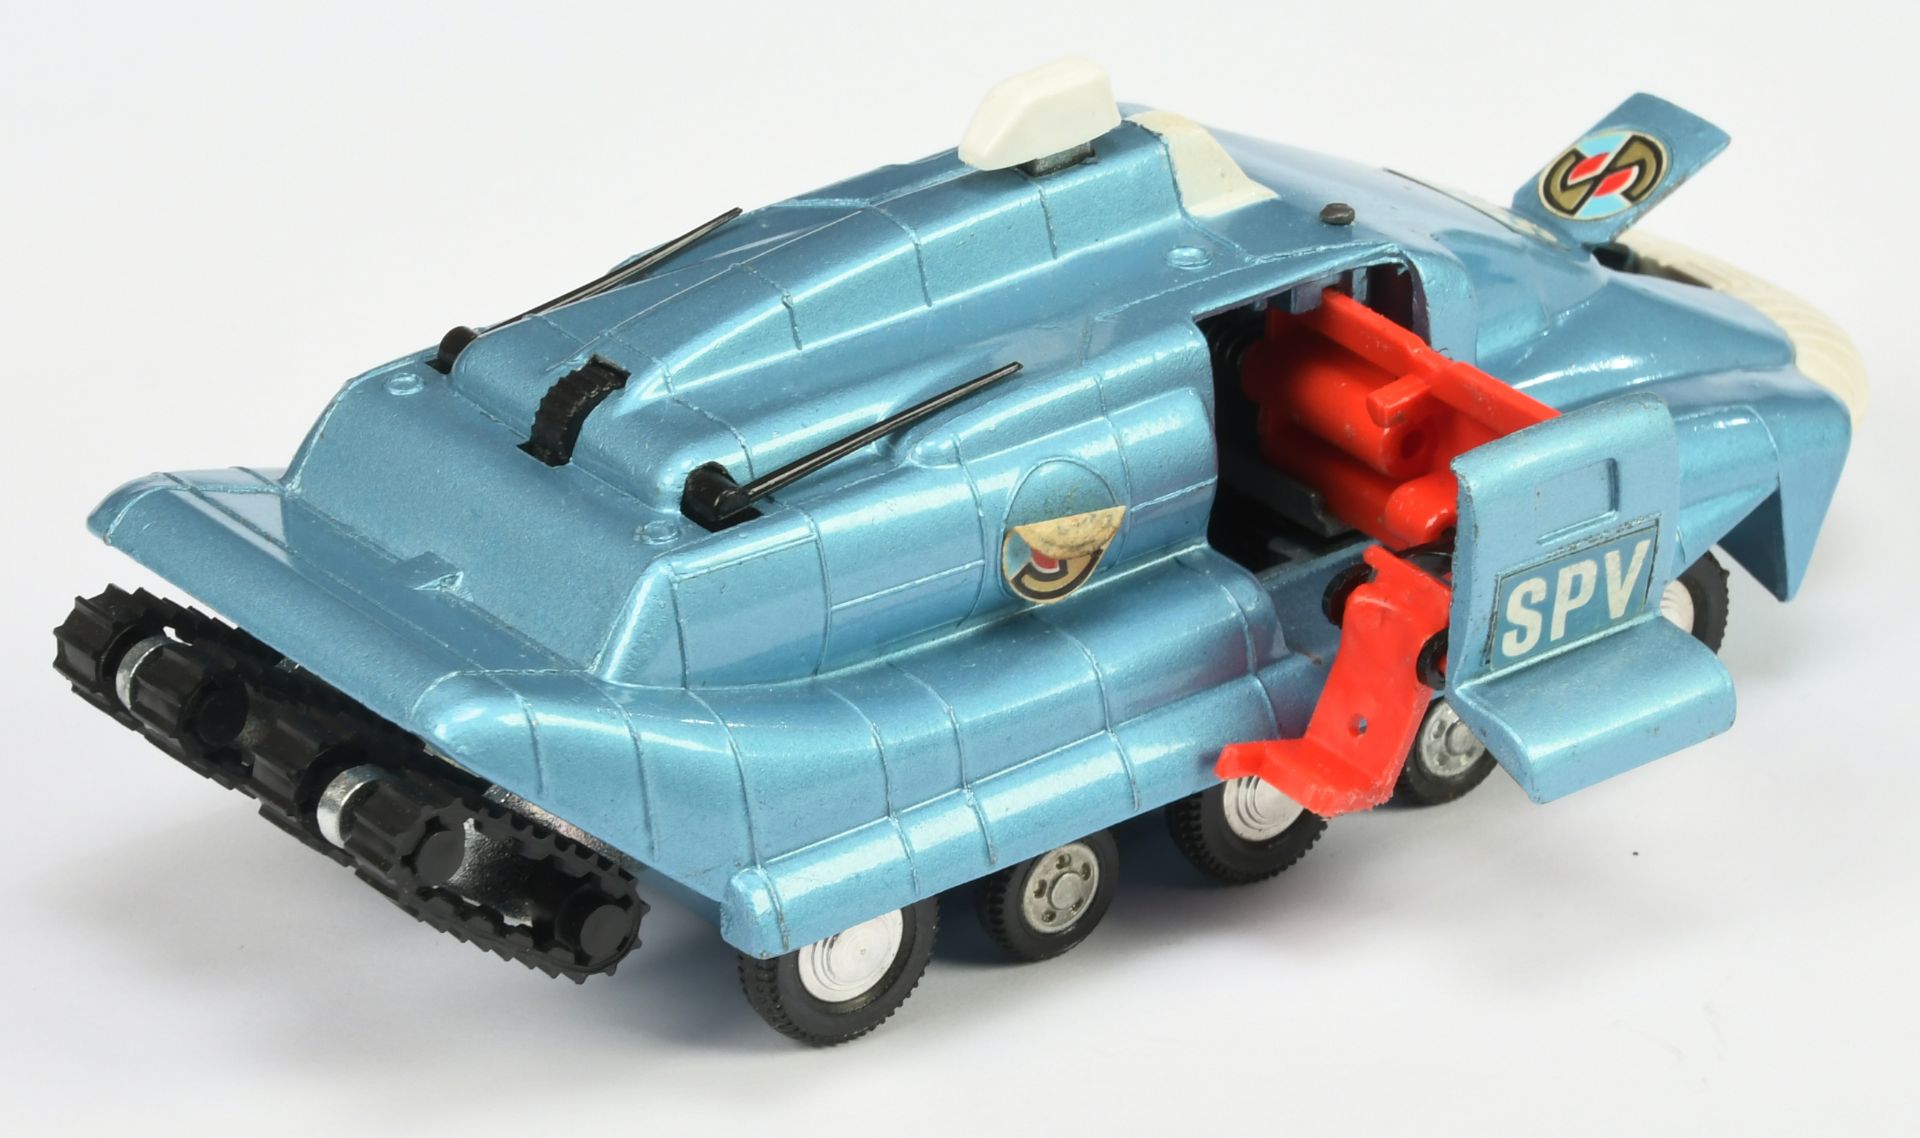 Dinky Toys 104 "Captain Scarlet"  Spectrum Pursuit Vehicle - Blue body, white front bumper, black... - Image 2 of 2